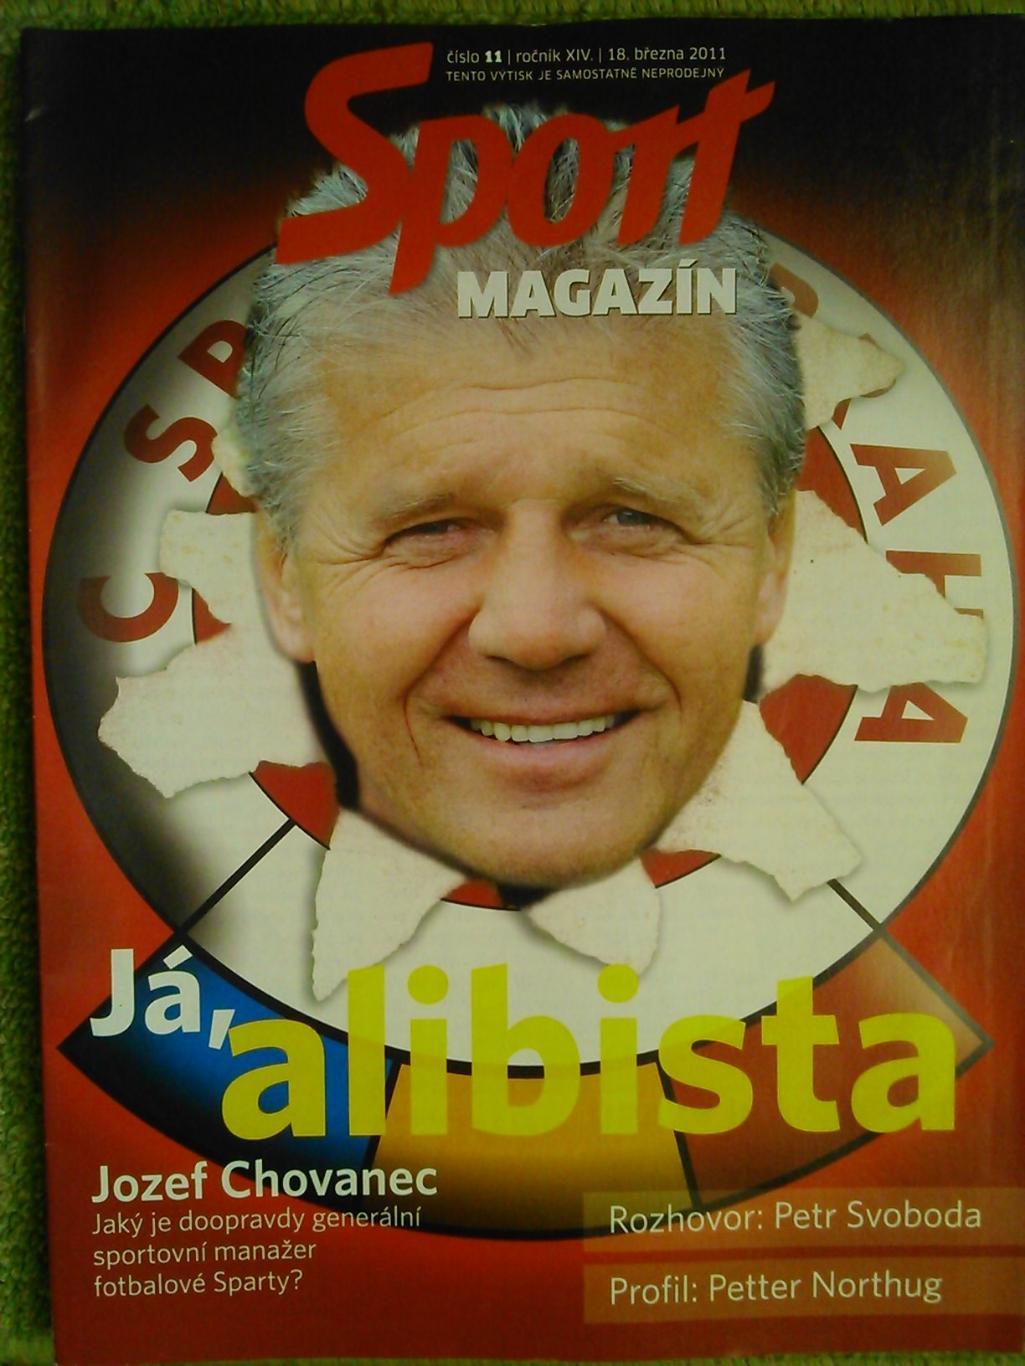 SPORT magazin № 11. 2011 (Чехия). Оптом скидки до 45%